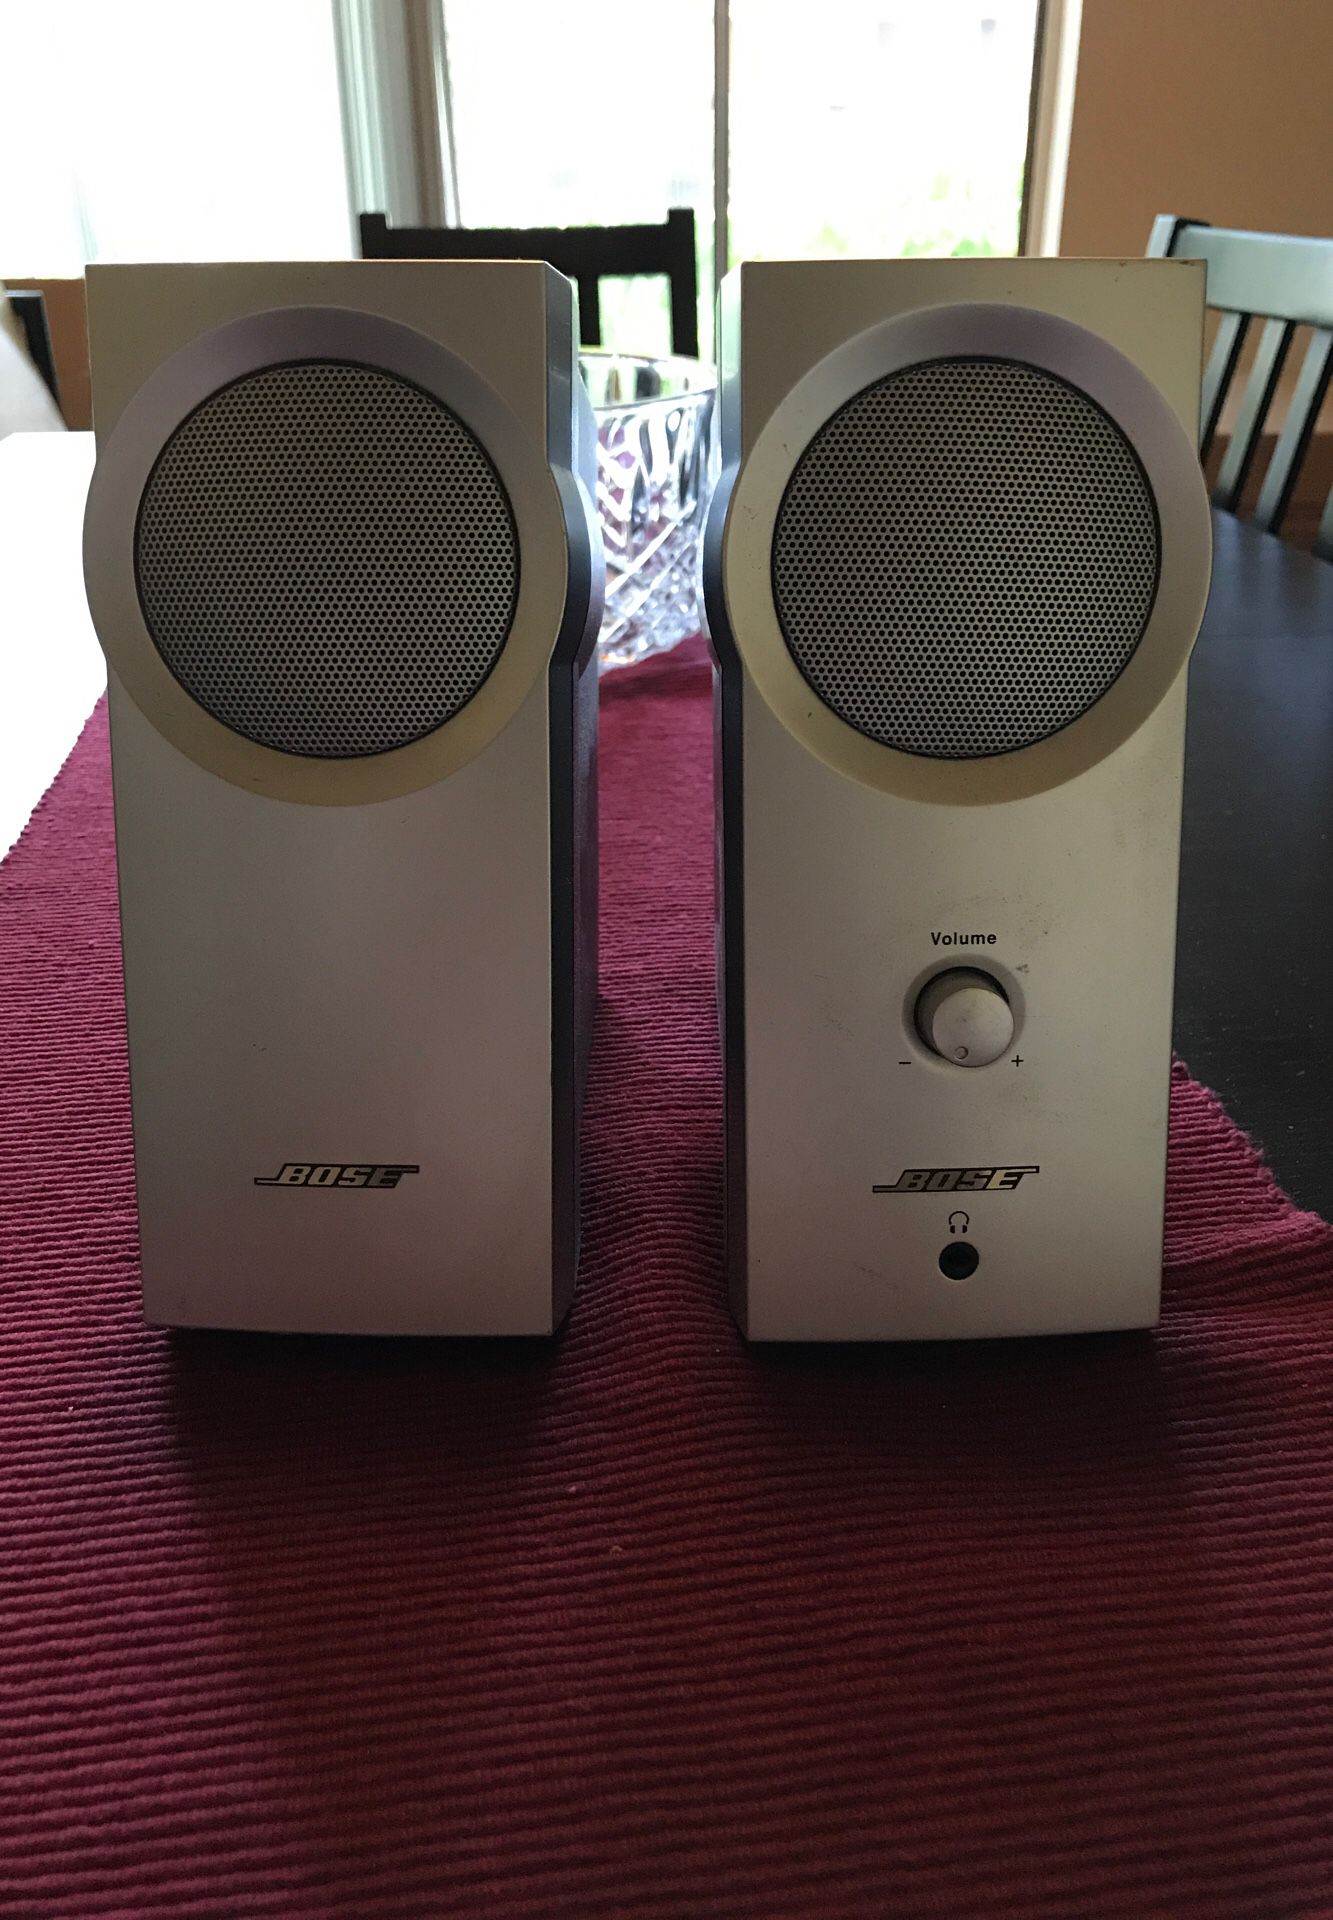 Bose computer speakers